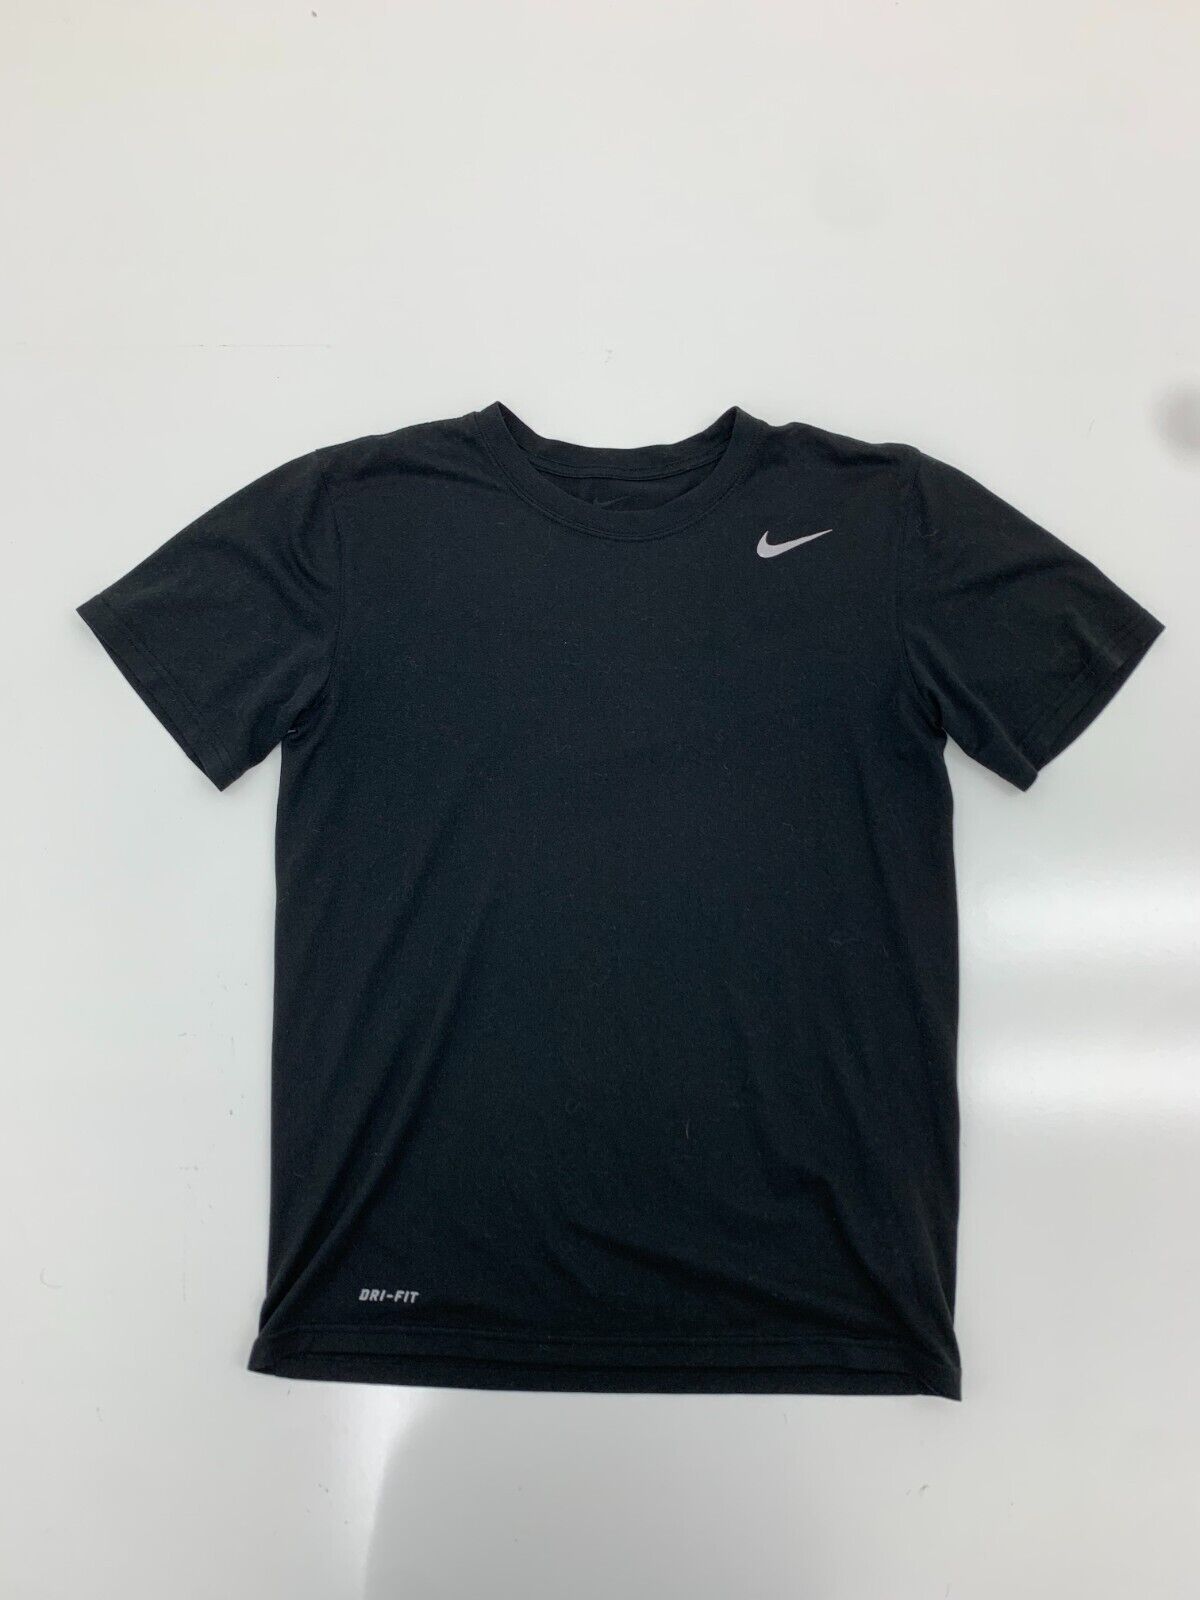 Nike Dri Fit Mens Black Short Sleeve Athletic Shirt Size Small